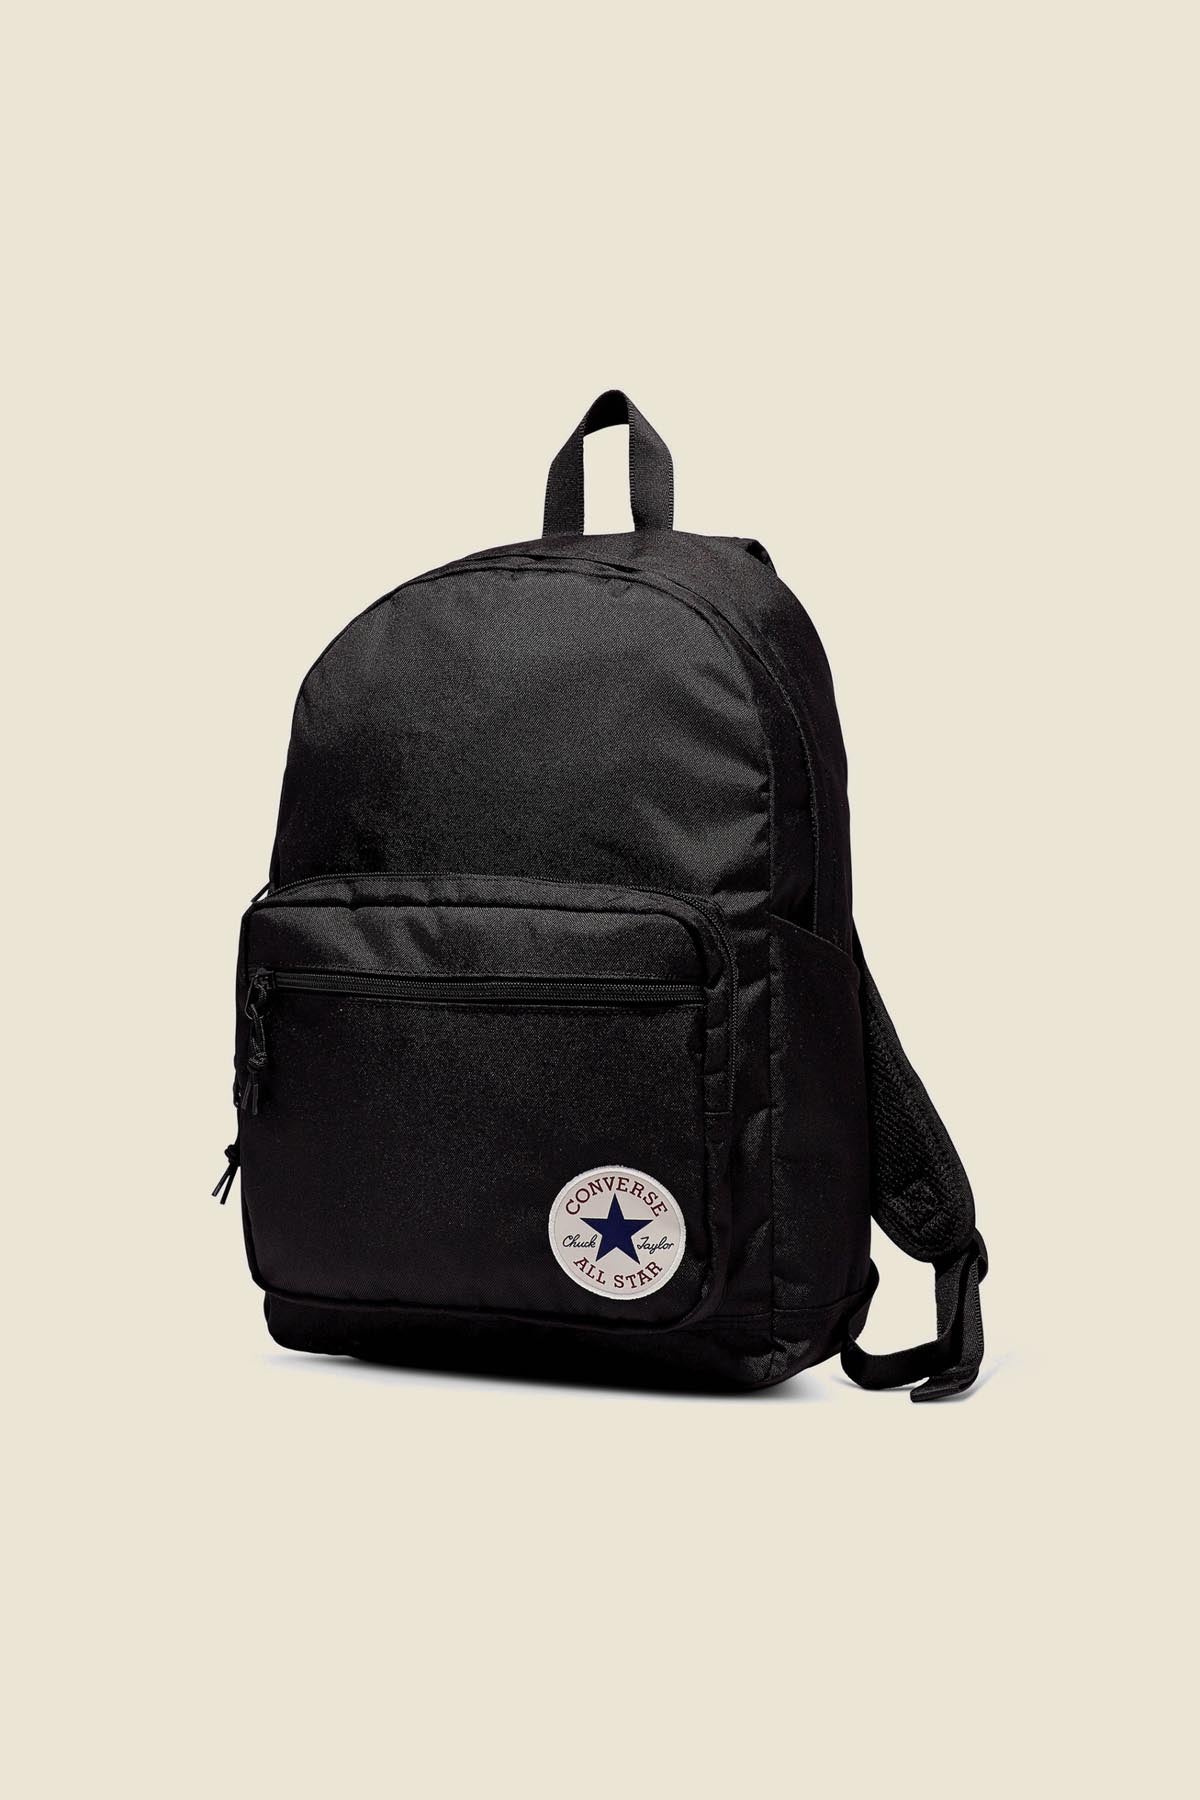 Converse Go 2 Backpack Black